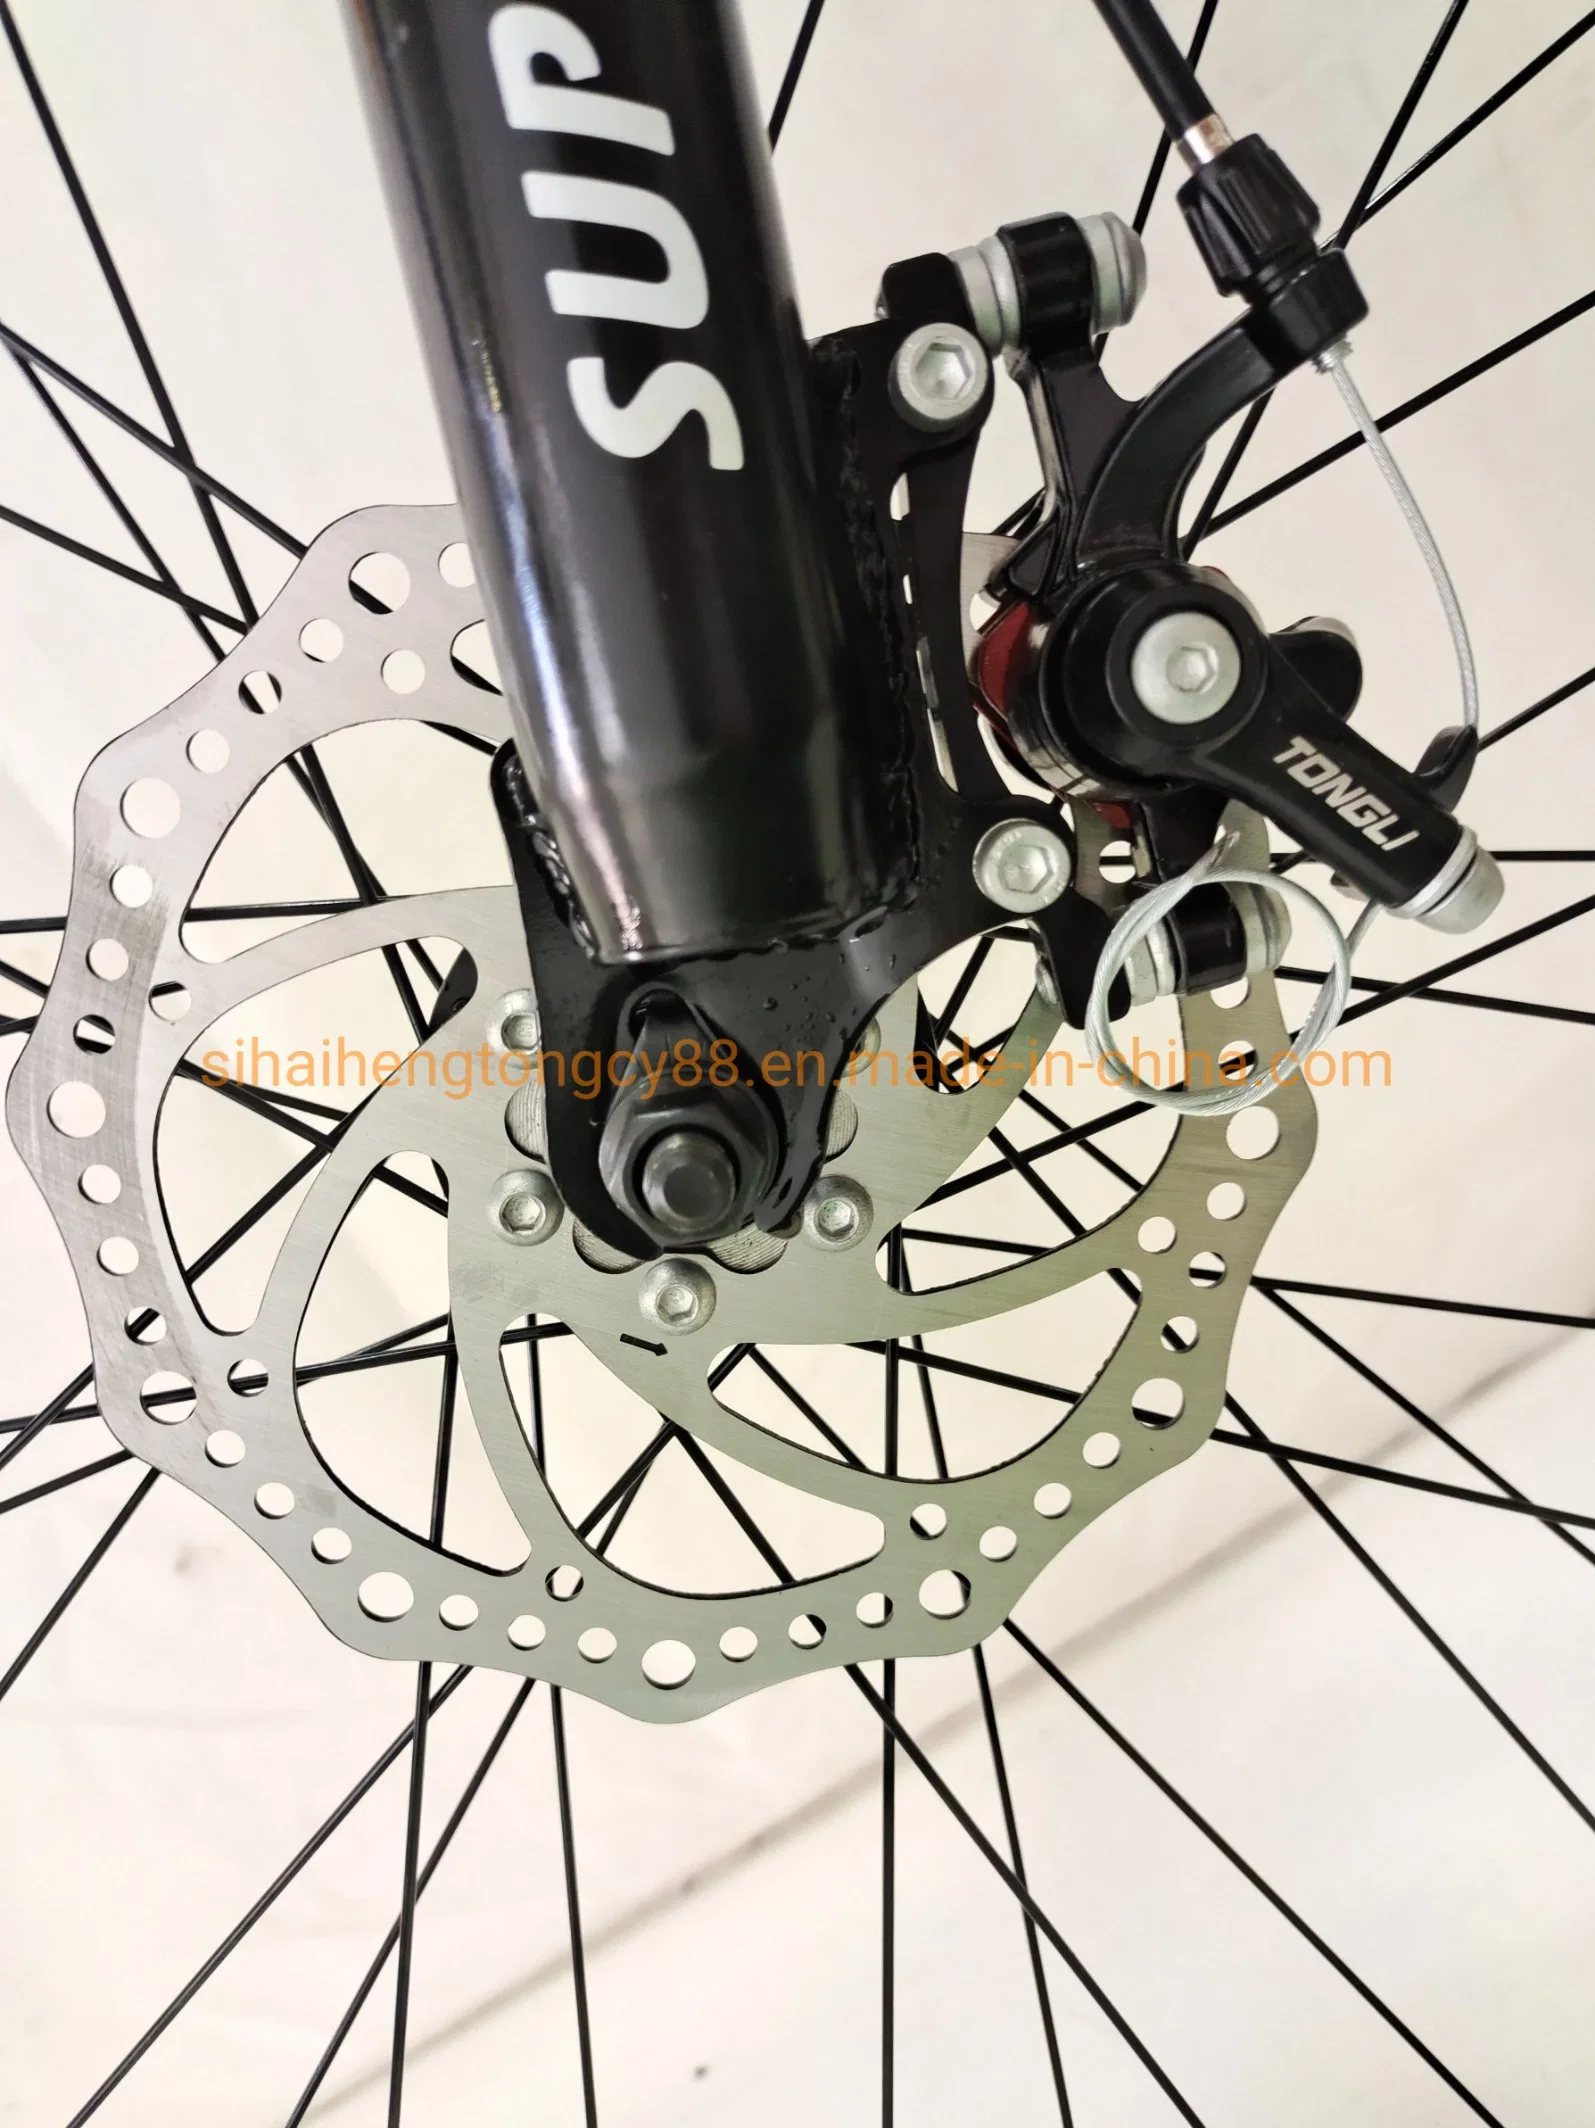 2*10 Speed Mountain Bike MTB Bicycle for Men /China Alloy Mountain Bike/29 Inch Mountain Bicycle